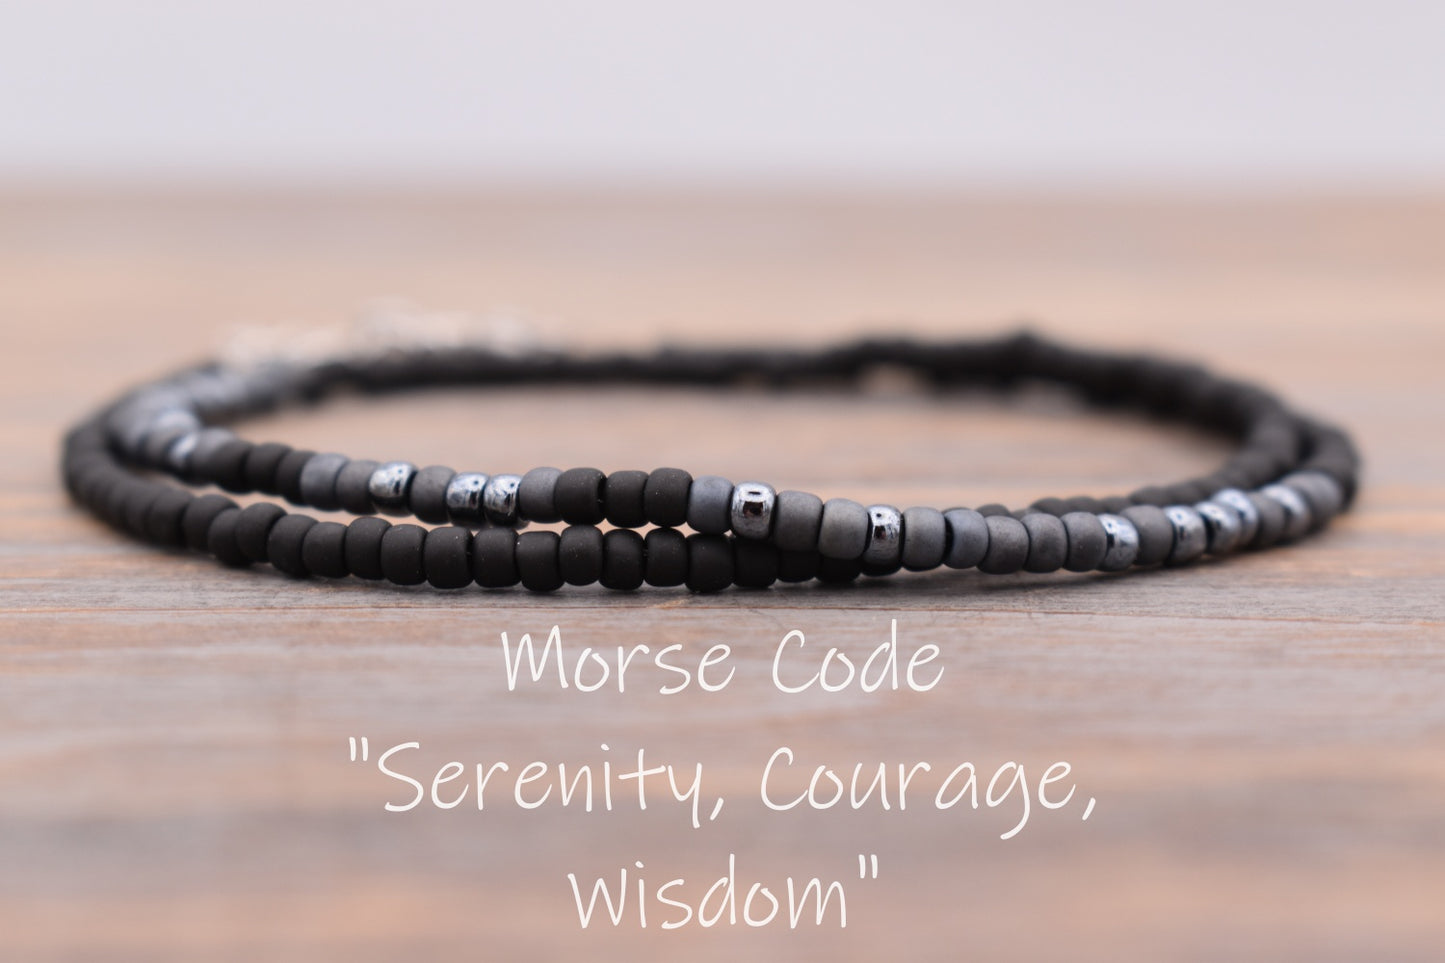 MEN'S Serenity, Courage, Wisdom Wrap Bracelet